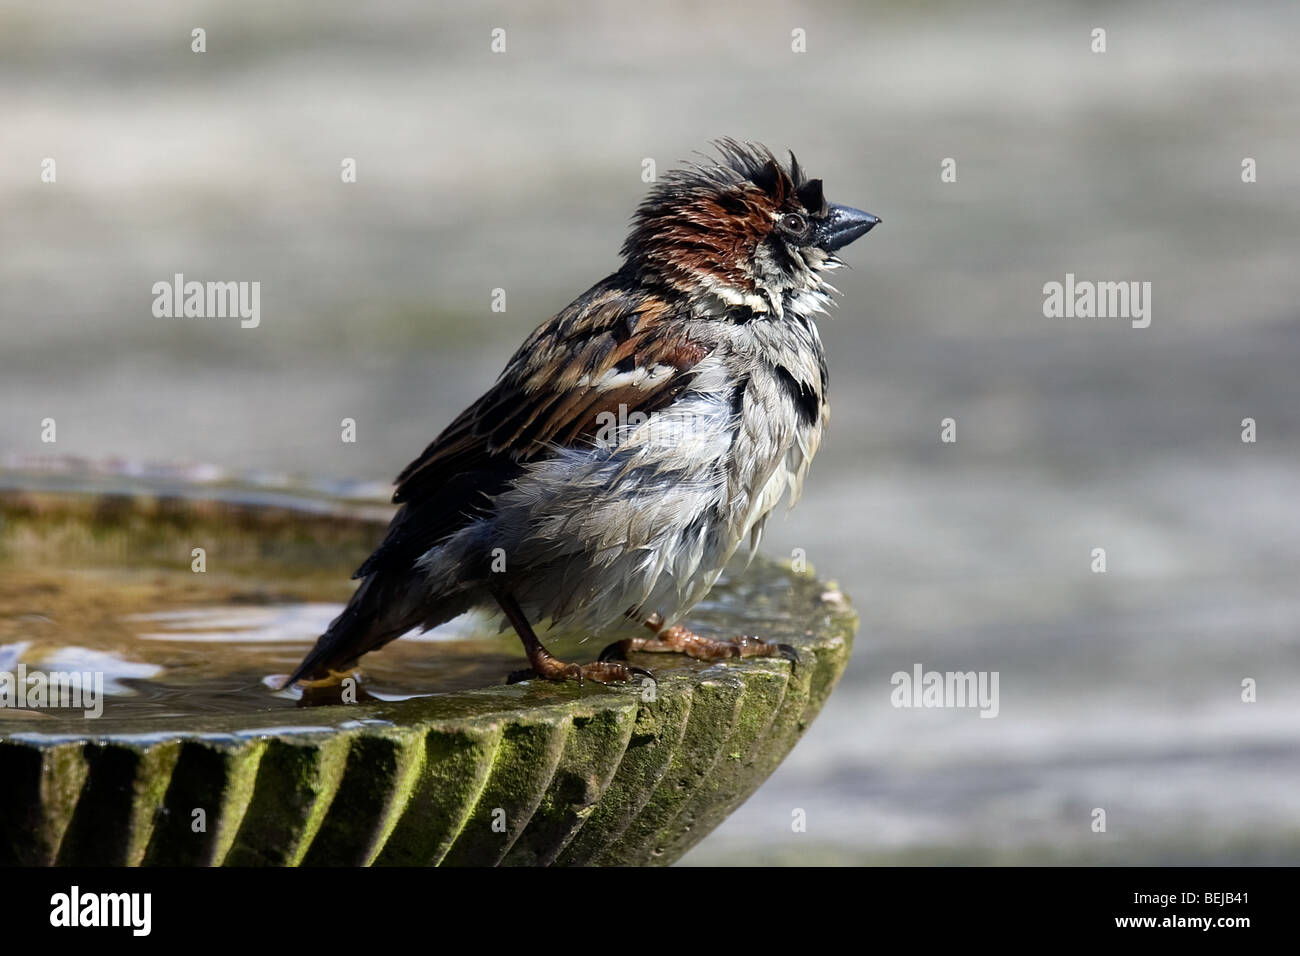 Male common sparrow (Passer domesticus) bathing in garden, Belgium Stock Photo